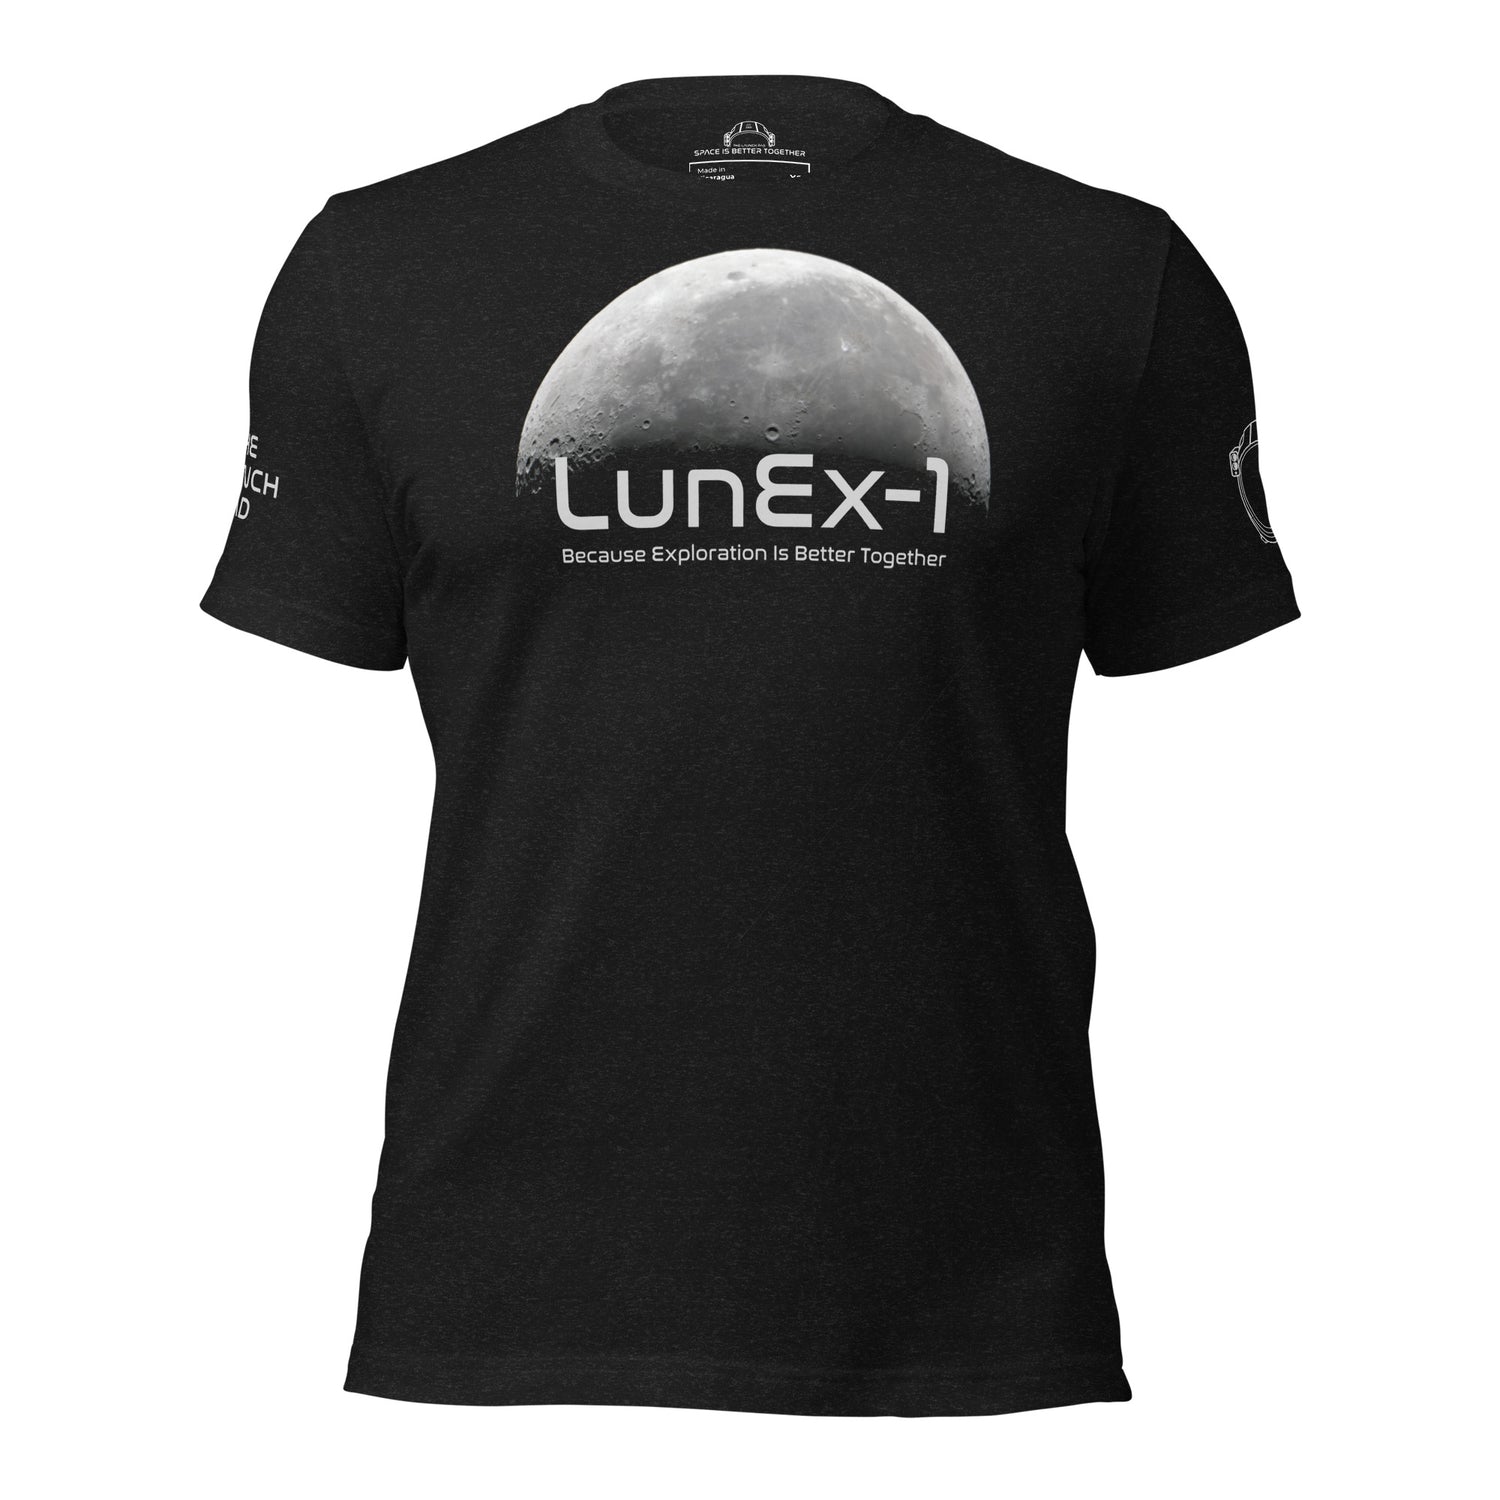 Lunex-1